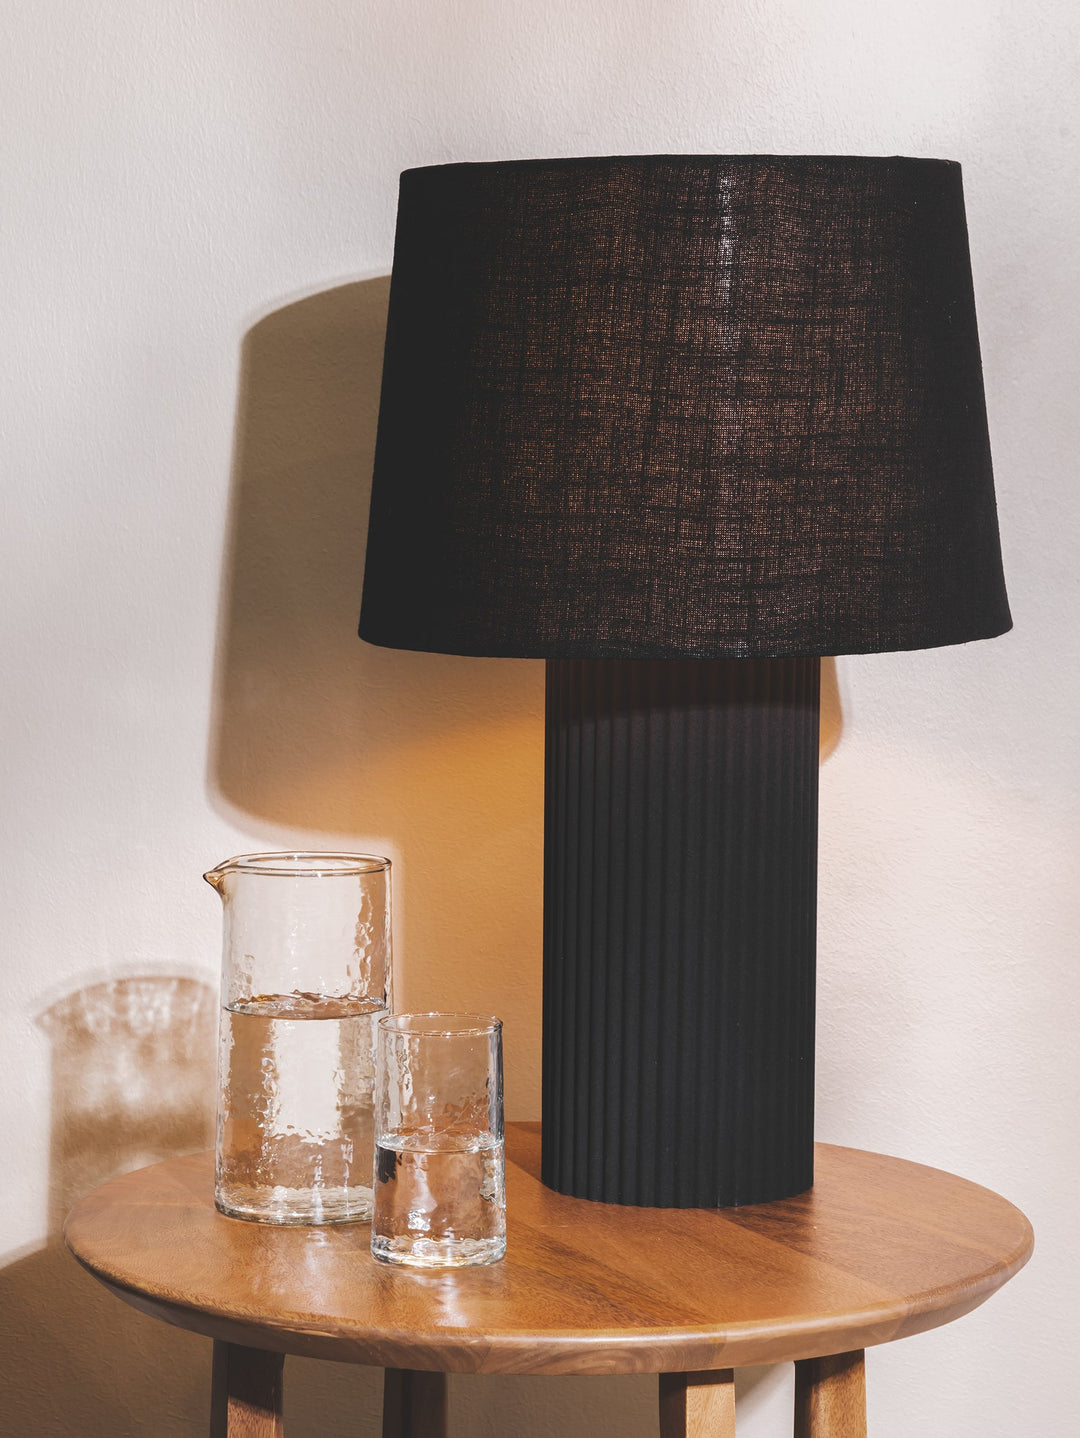 Raphael Table Light in Nero - Hertex Haus Online - Homeware